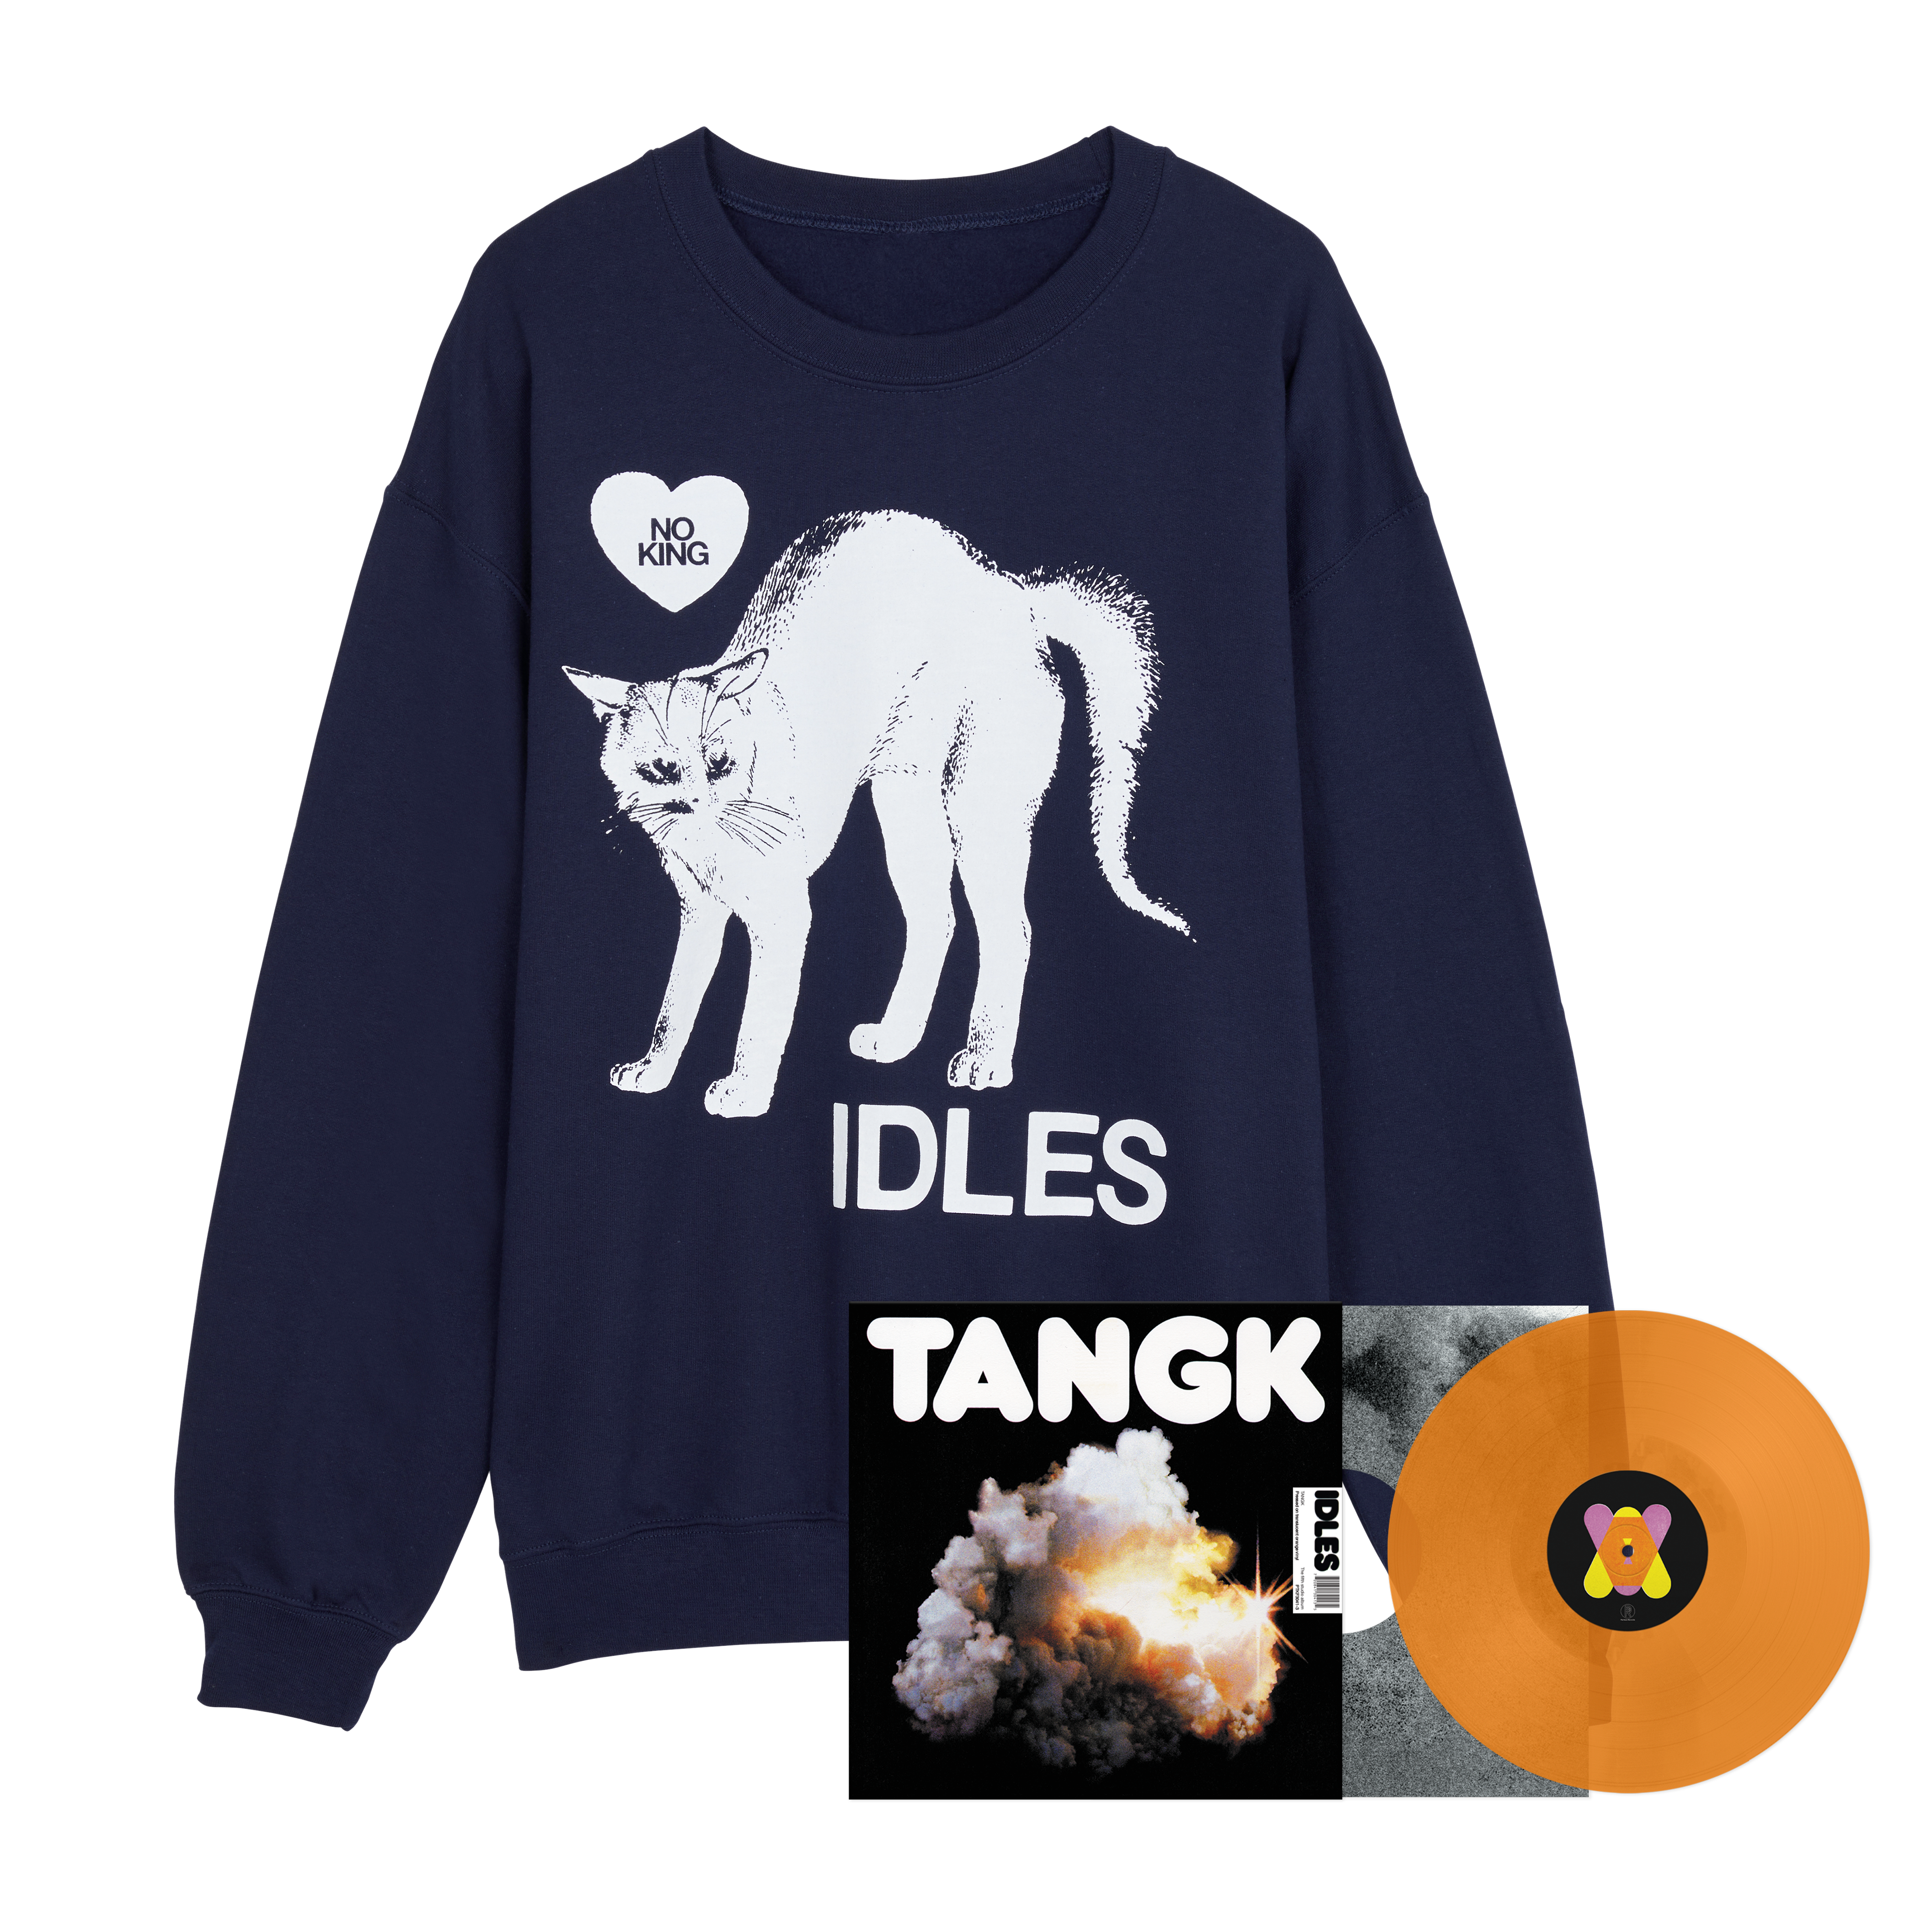 TANGK Ltd Edition Orange Vinyl + No King Cat Crewneck